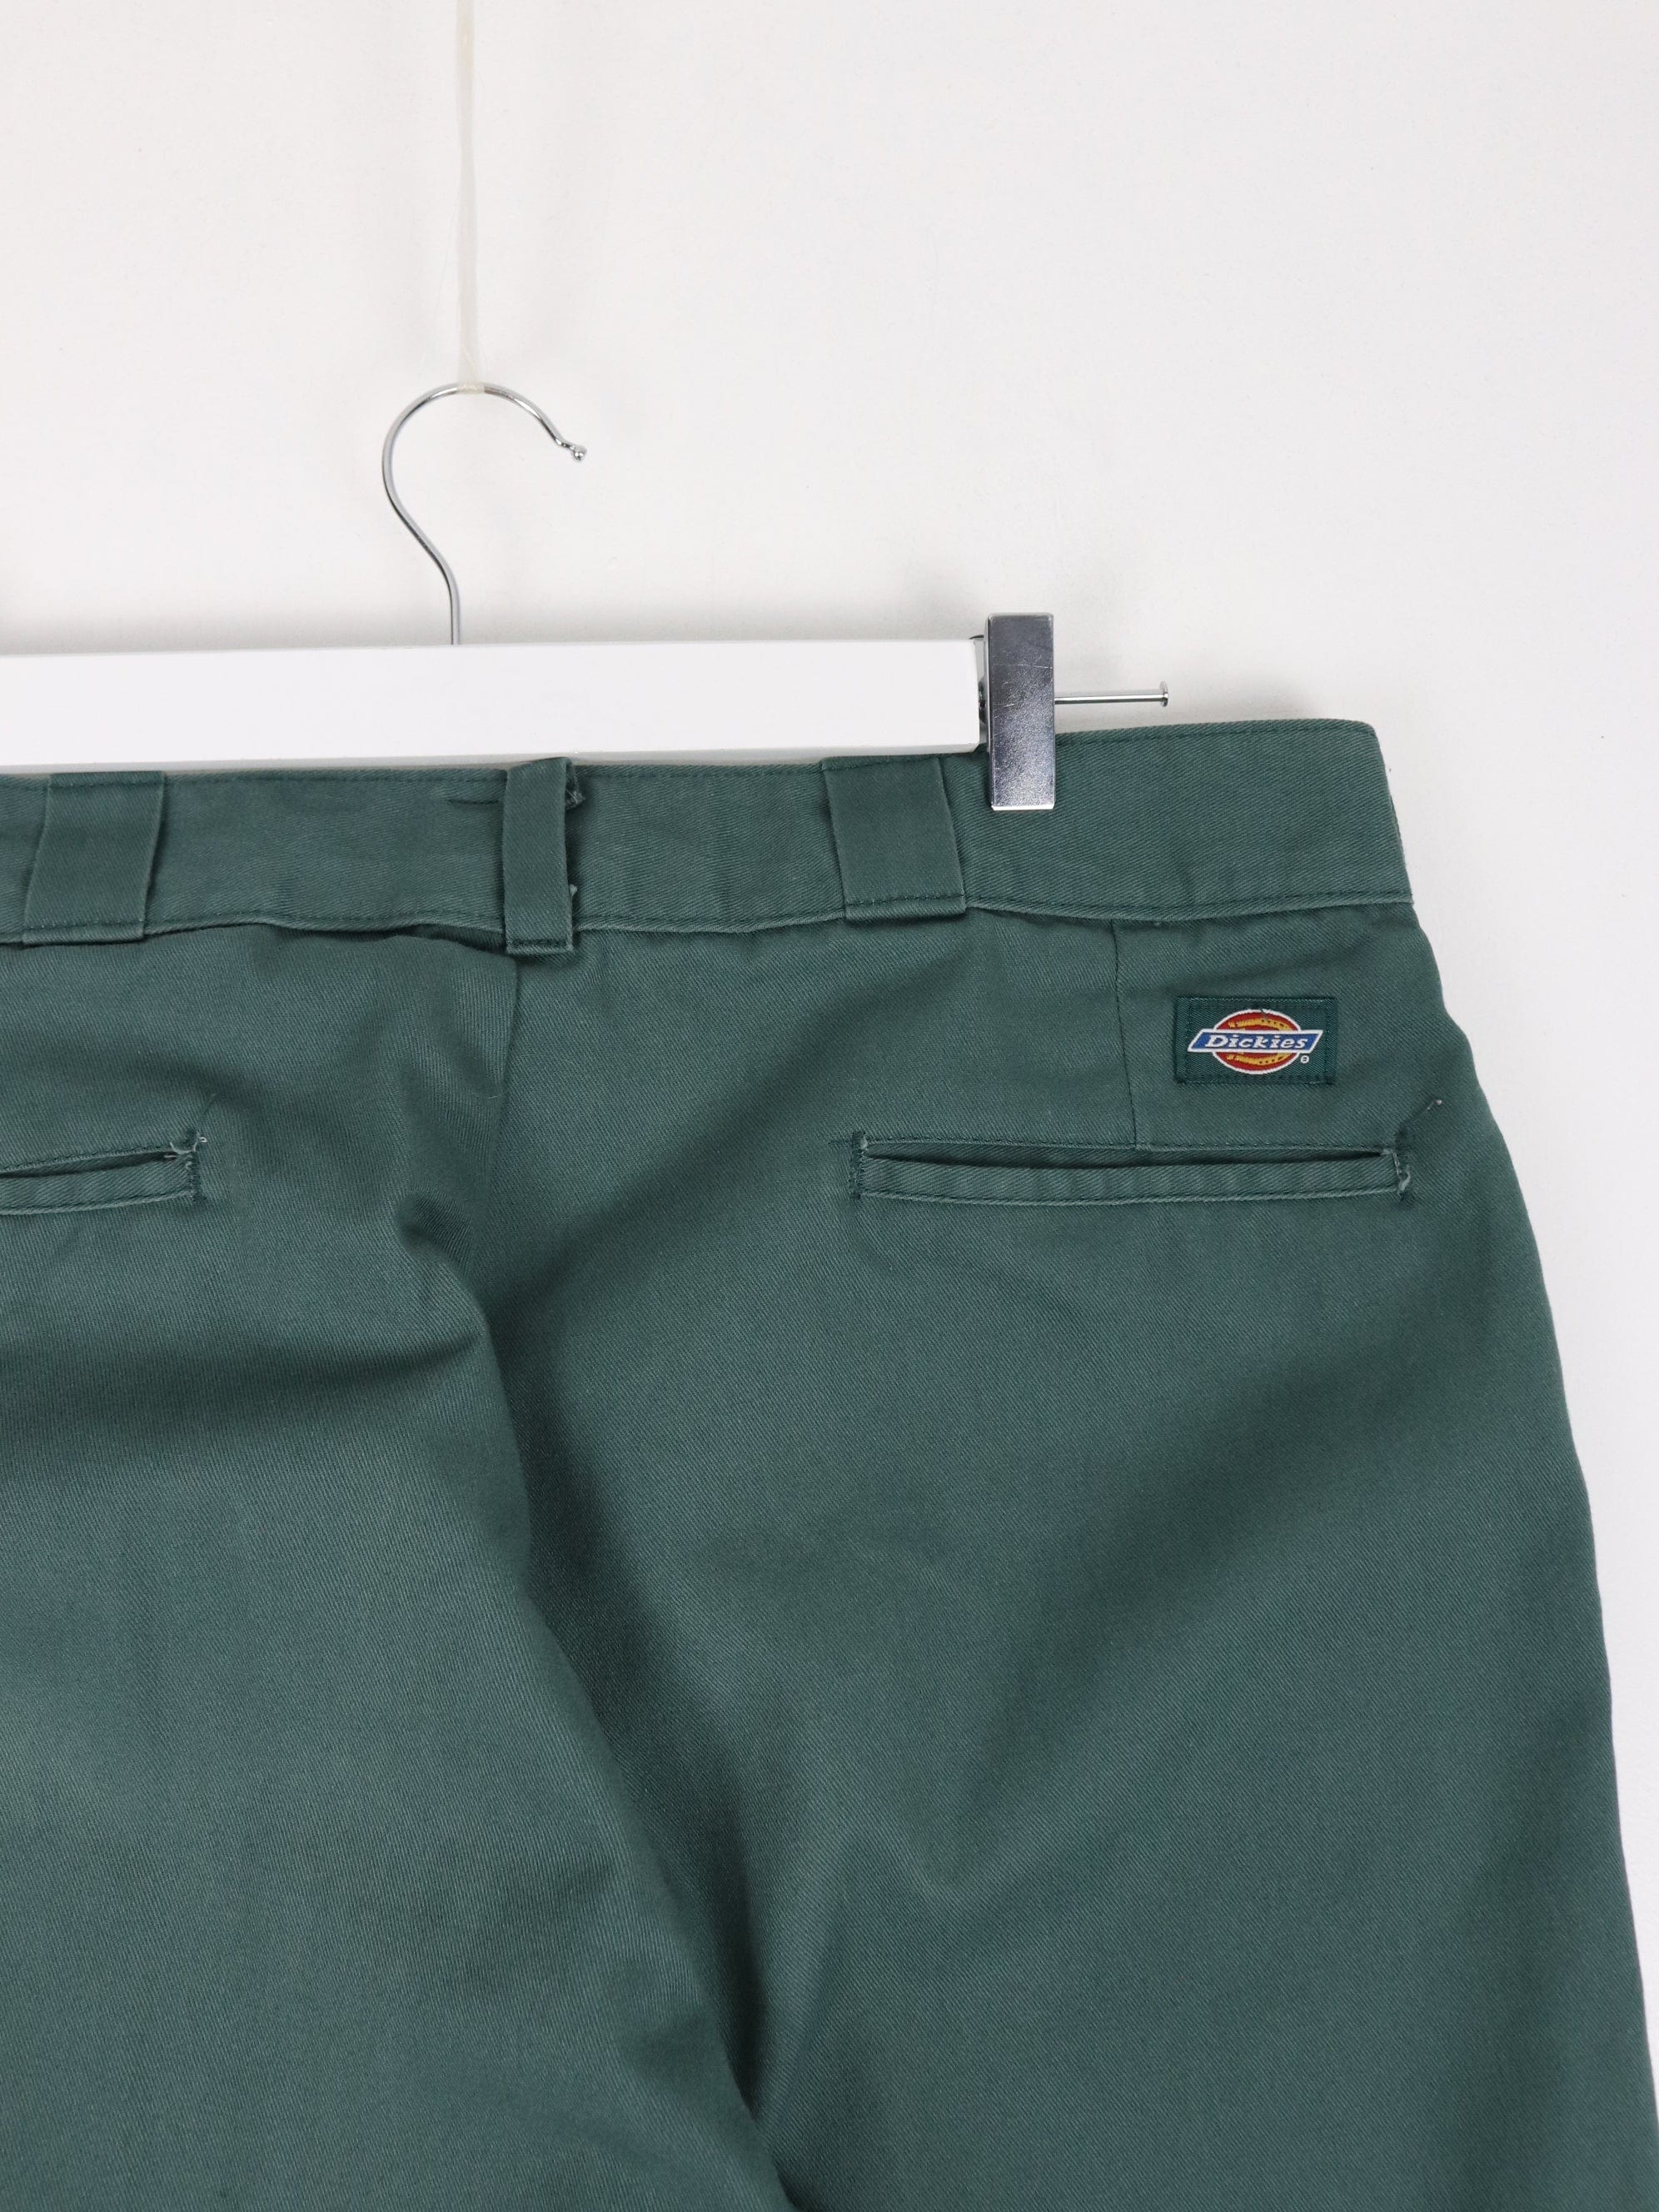 Dickies Pants Mens 34 x 29 Green Pleated Chino Work Wear – Proper